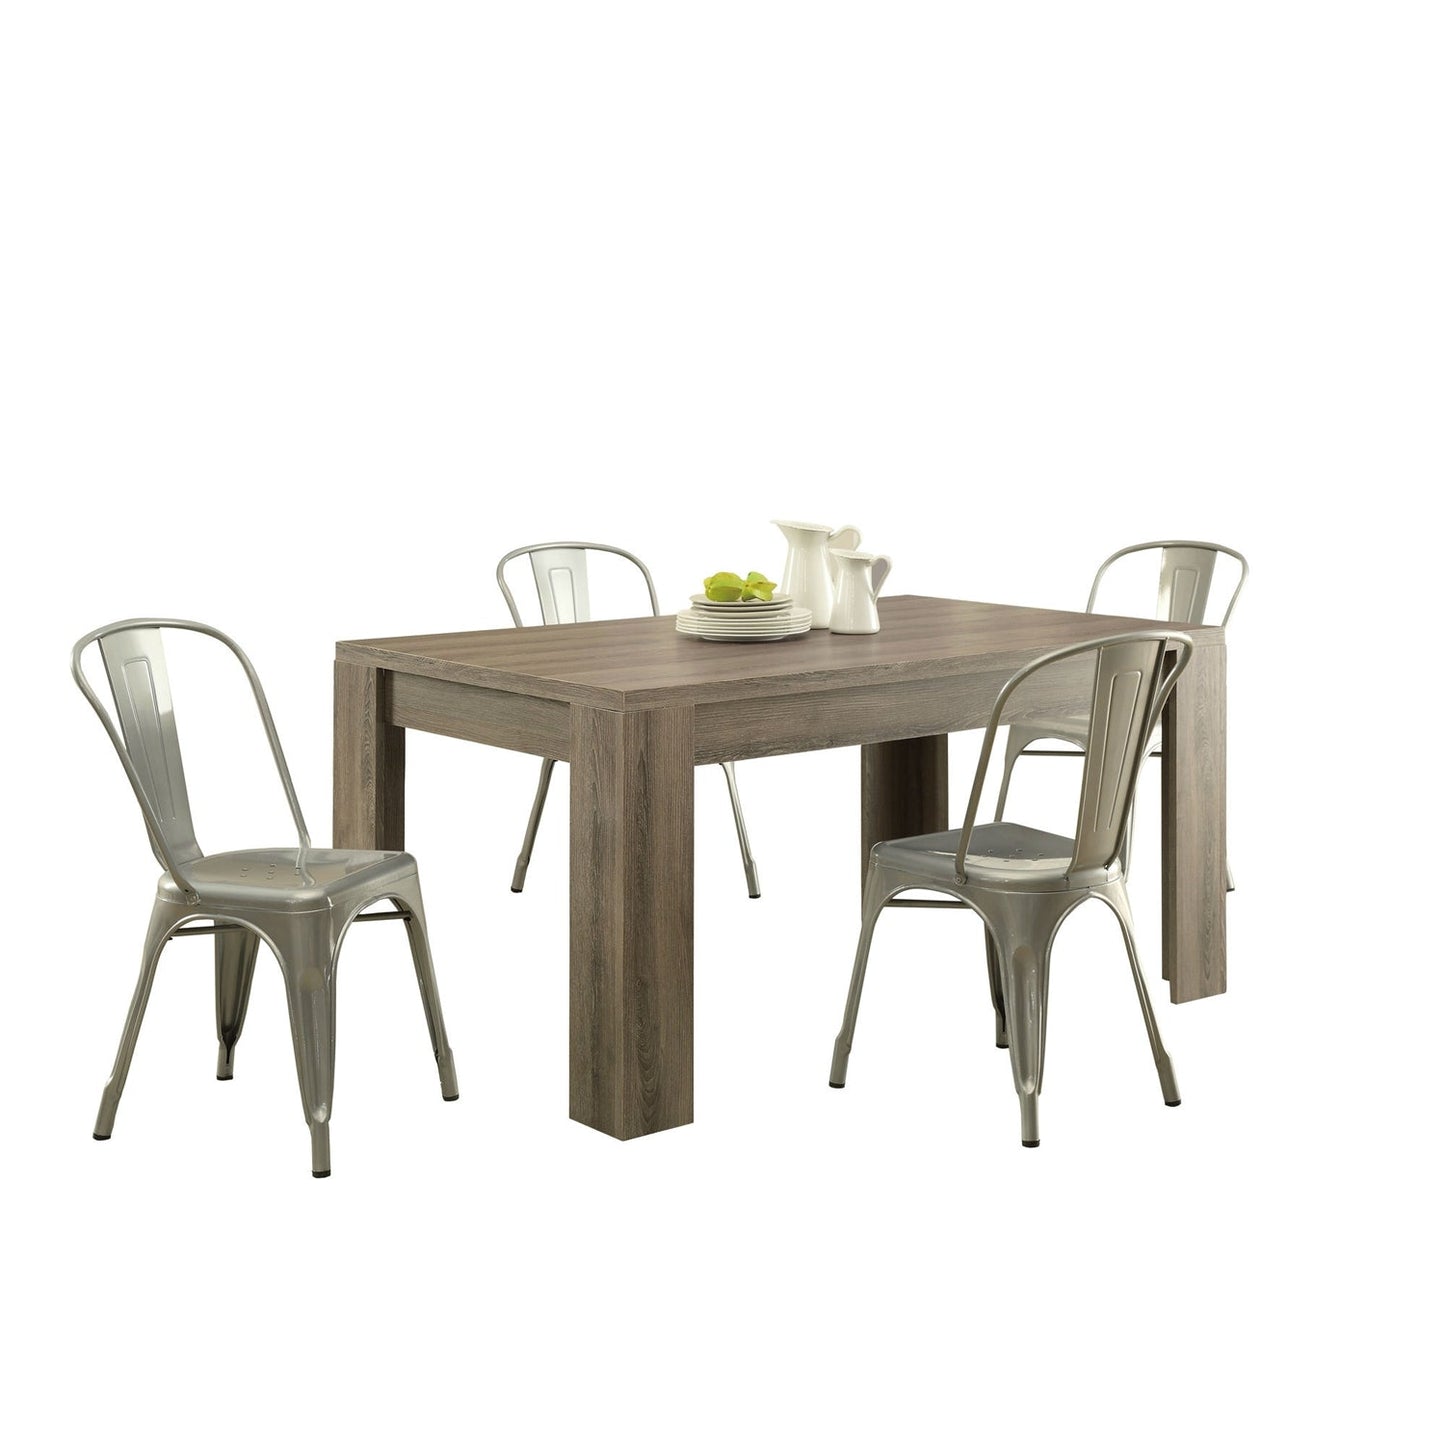 Dining > Dining Tables - Modern Block Leg Rectangular Dining Table In Dark Taupe Wood Finish